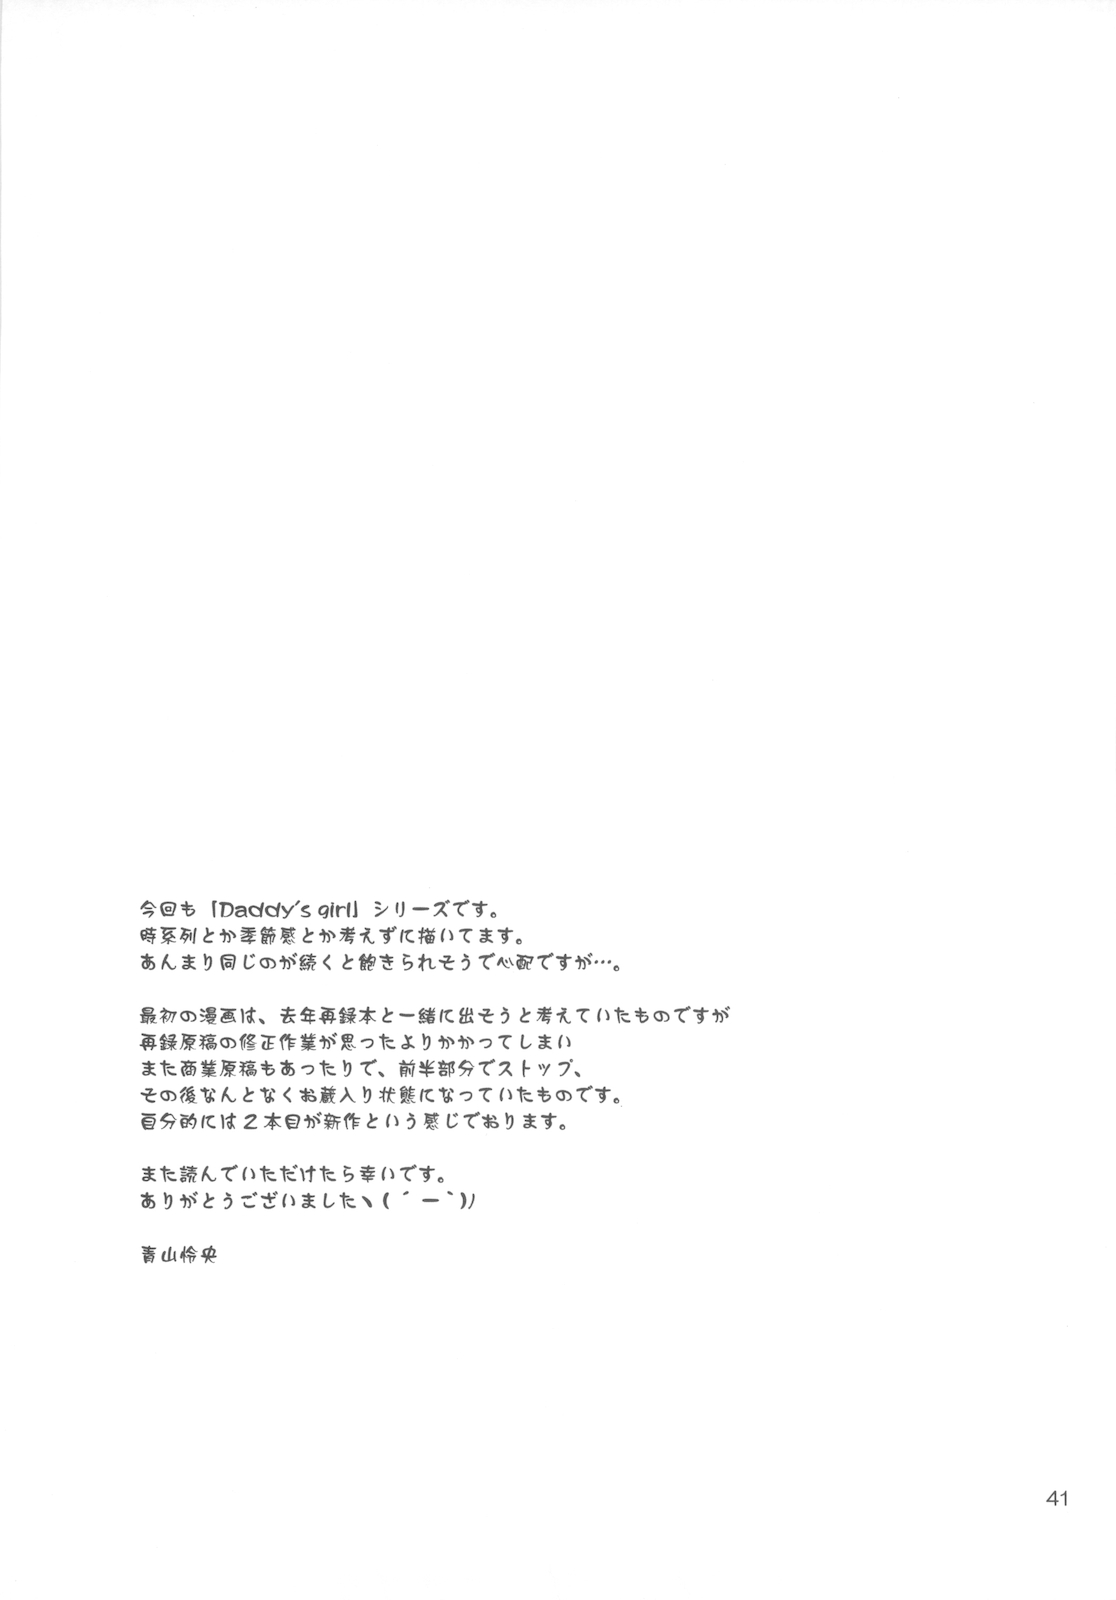 (C76) [NIKOPONDO (青山怜央)] DG Vol.2